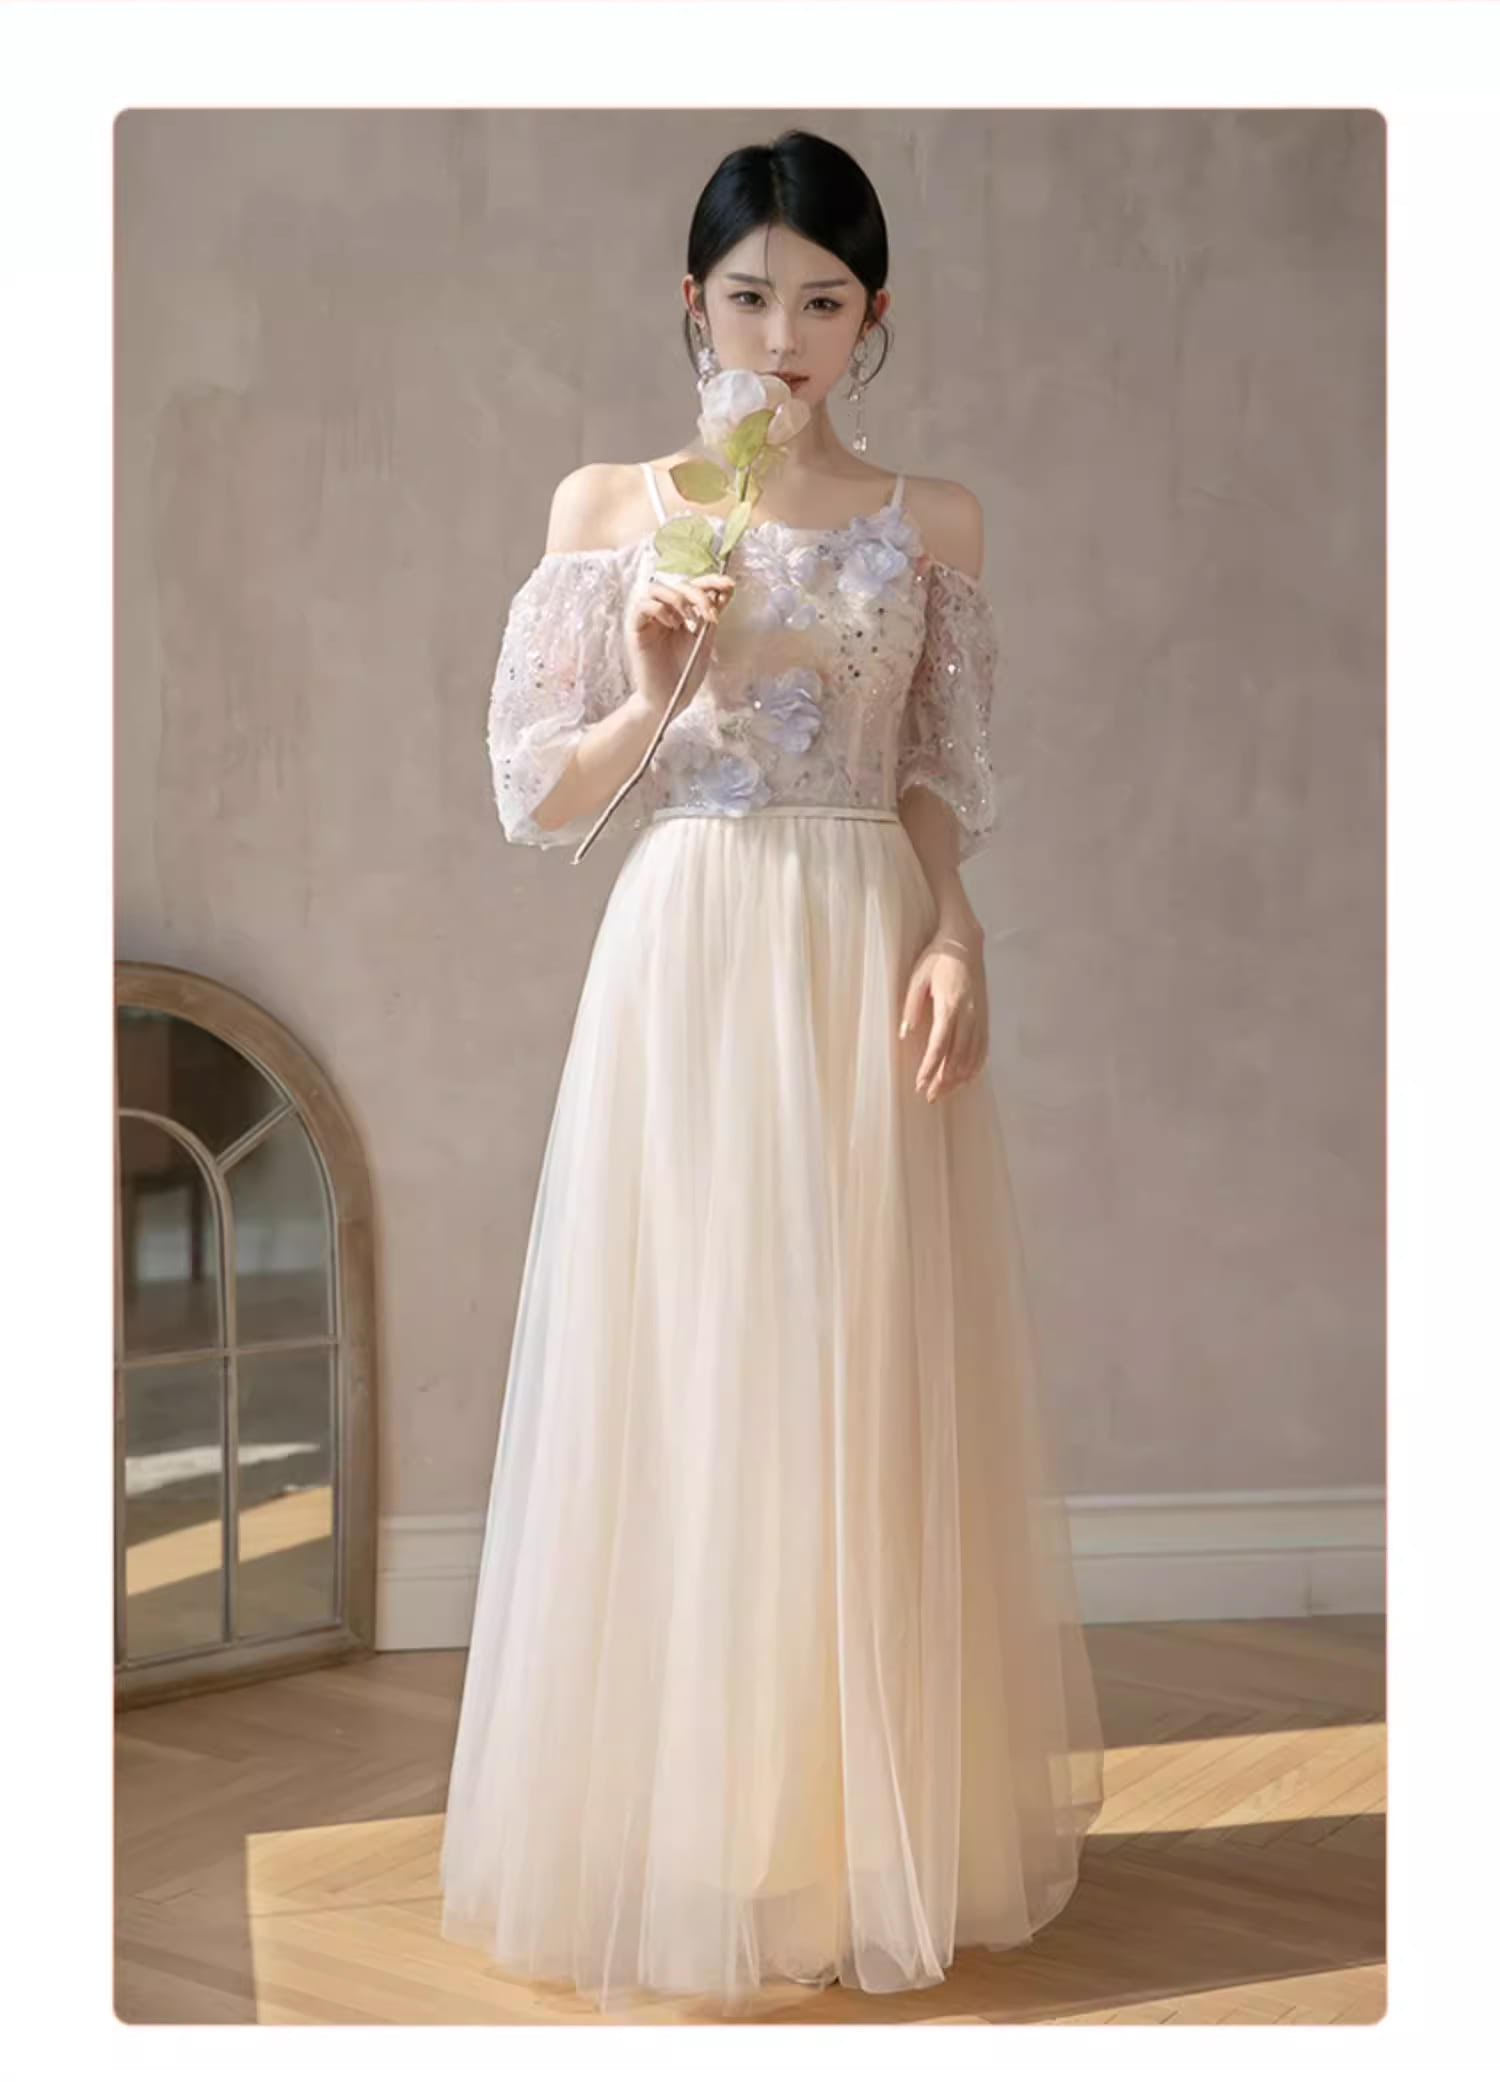 Romance-Flower-Champagne-Bridal-Party-Gown-Fashion-Bridesmaid-Dress19